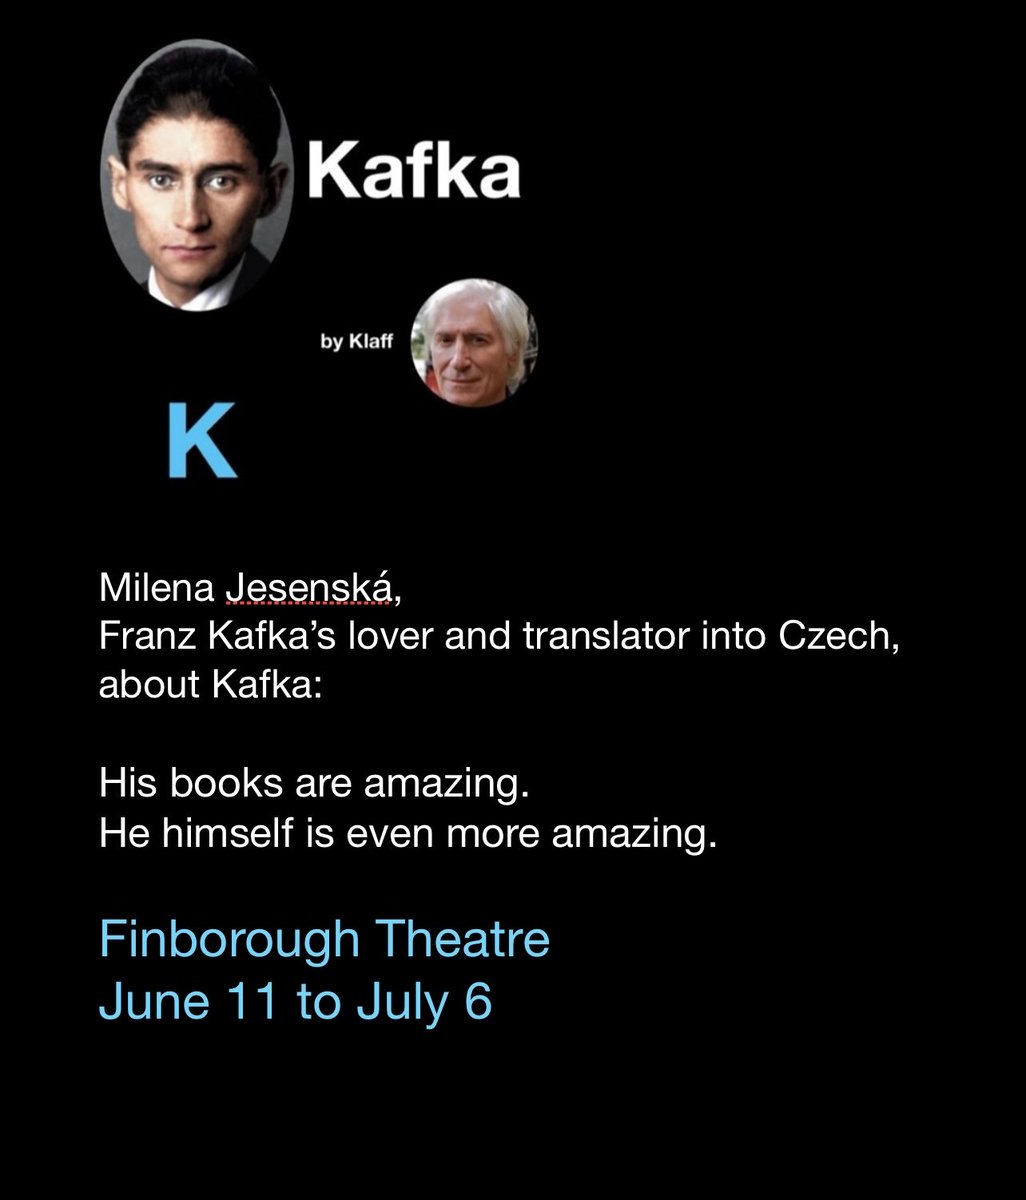 Coming Soon 
Kafka
by Jack Klaff
Finborough 
11 June to 6 July 
Directed by Colin Watkeys 

Details, Info and
Booking:
finboroughtheatre.co.uk/production/Kaf…

@finborough 
#HotTicket #FranzKafka #GlobalKafka #Milena #DoNotMissThis